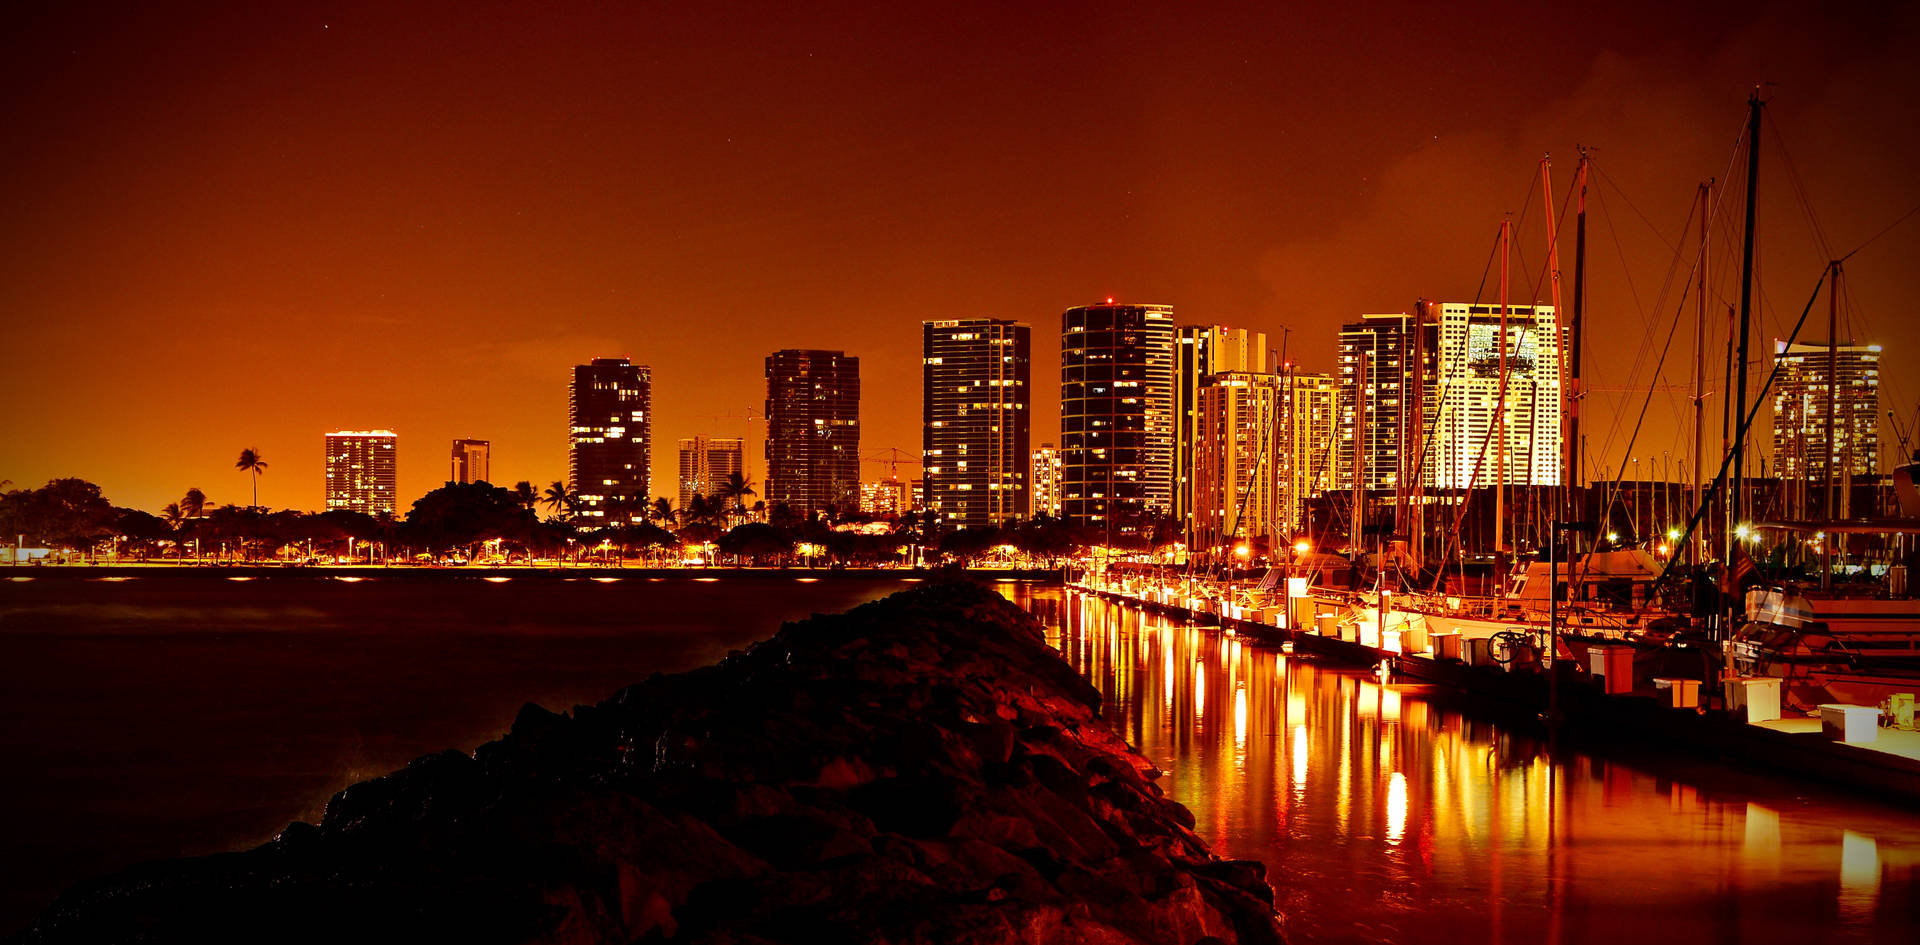 Glowing Night City Reflection Background